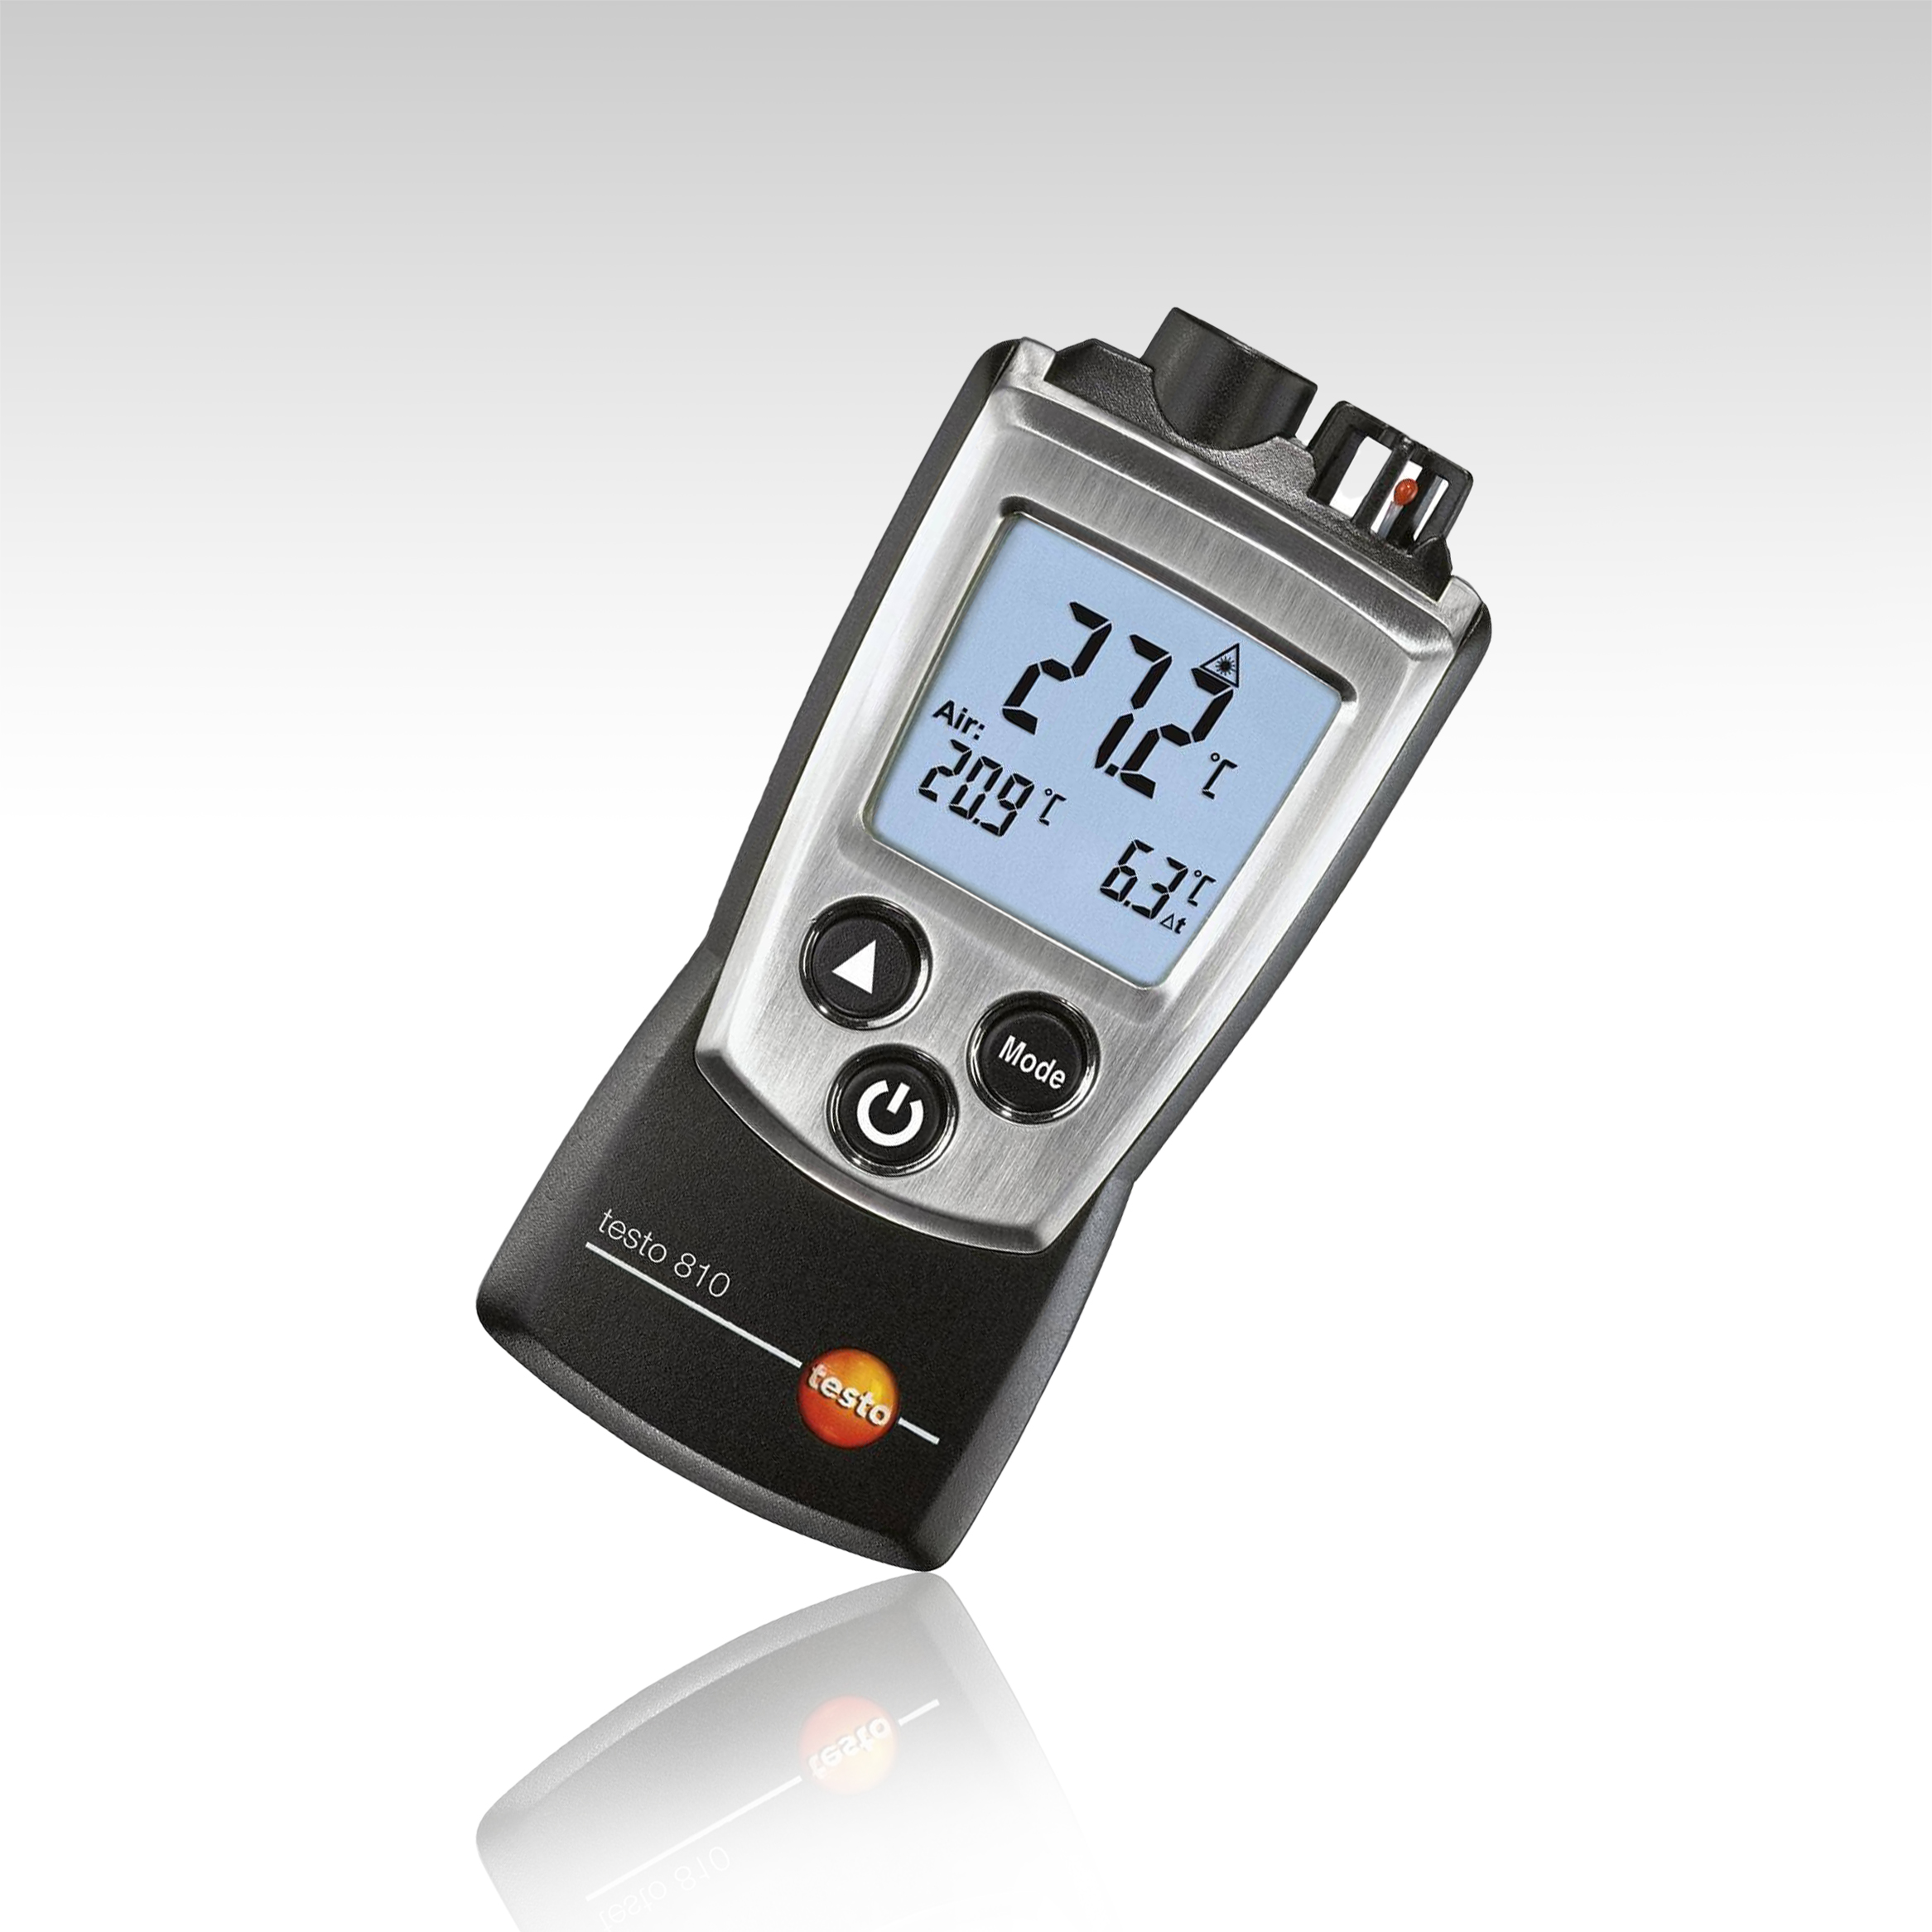 TESTO IR Thermometer With Ambient Temperature Testo-810